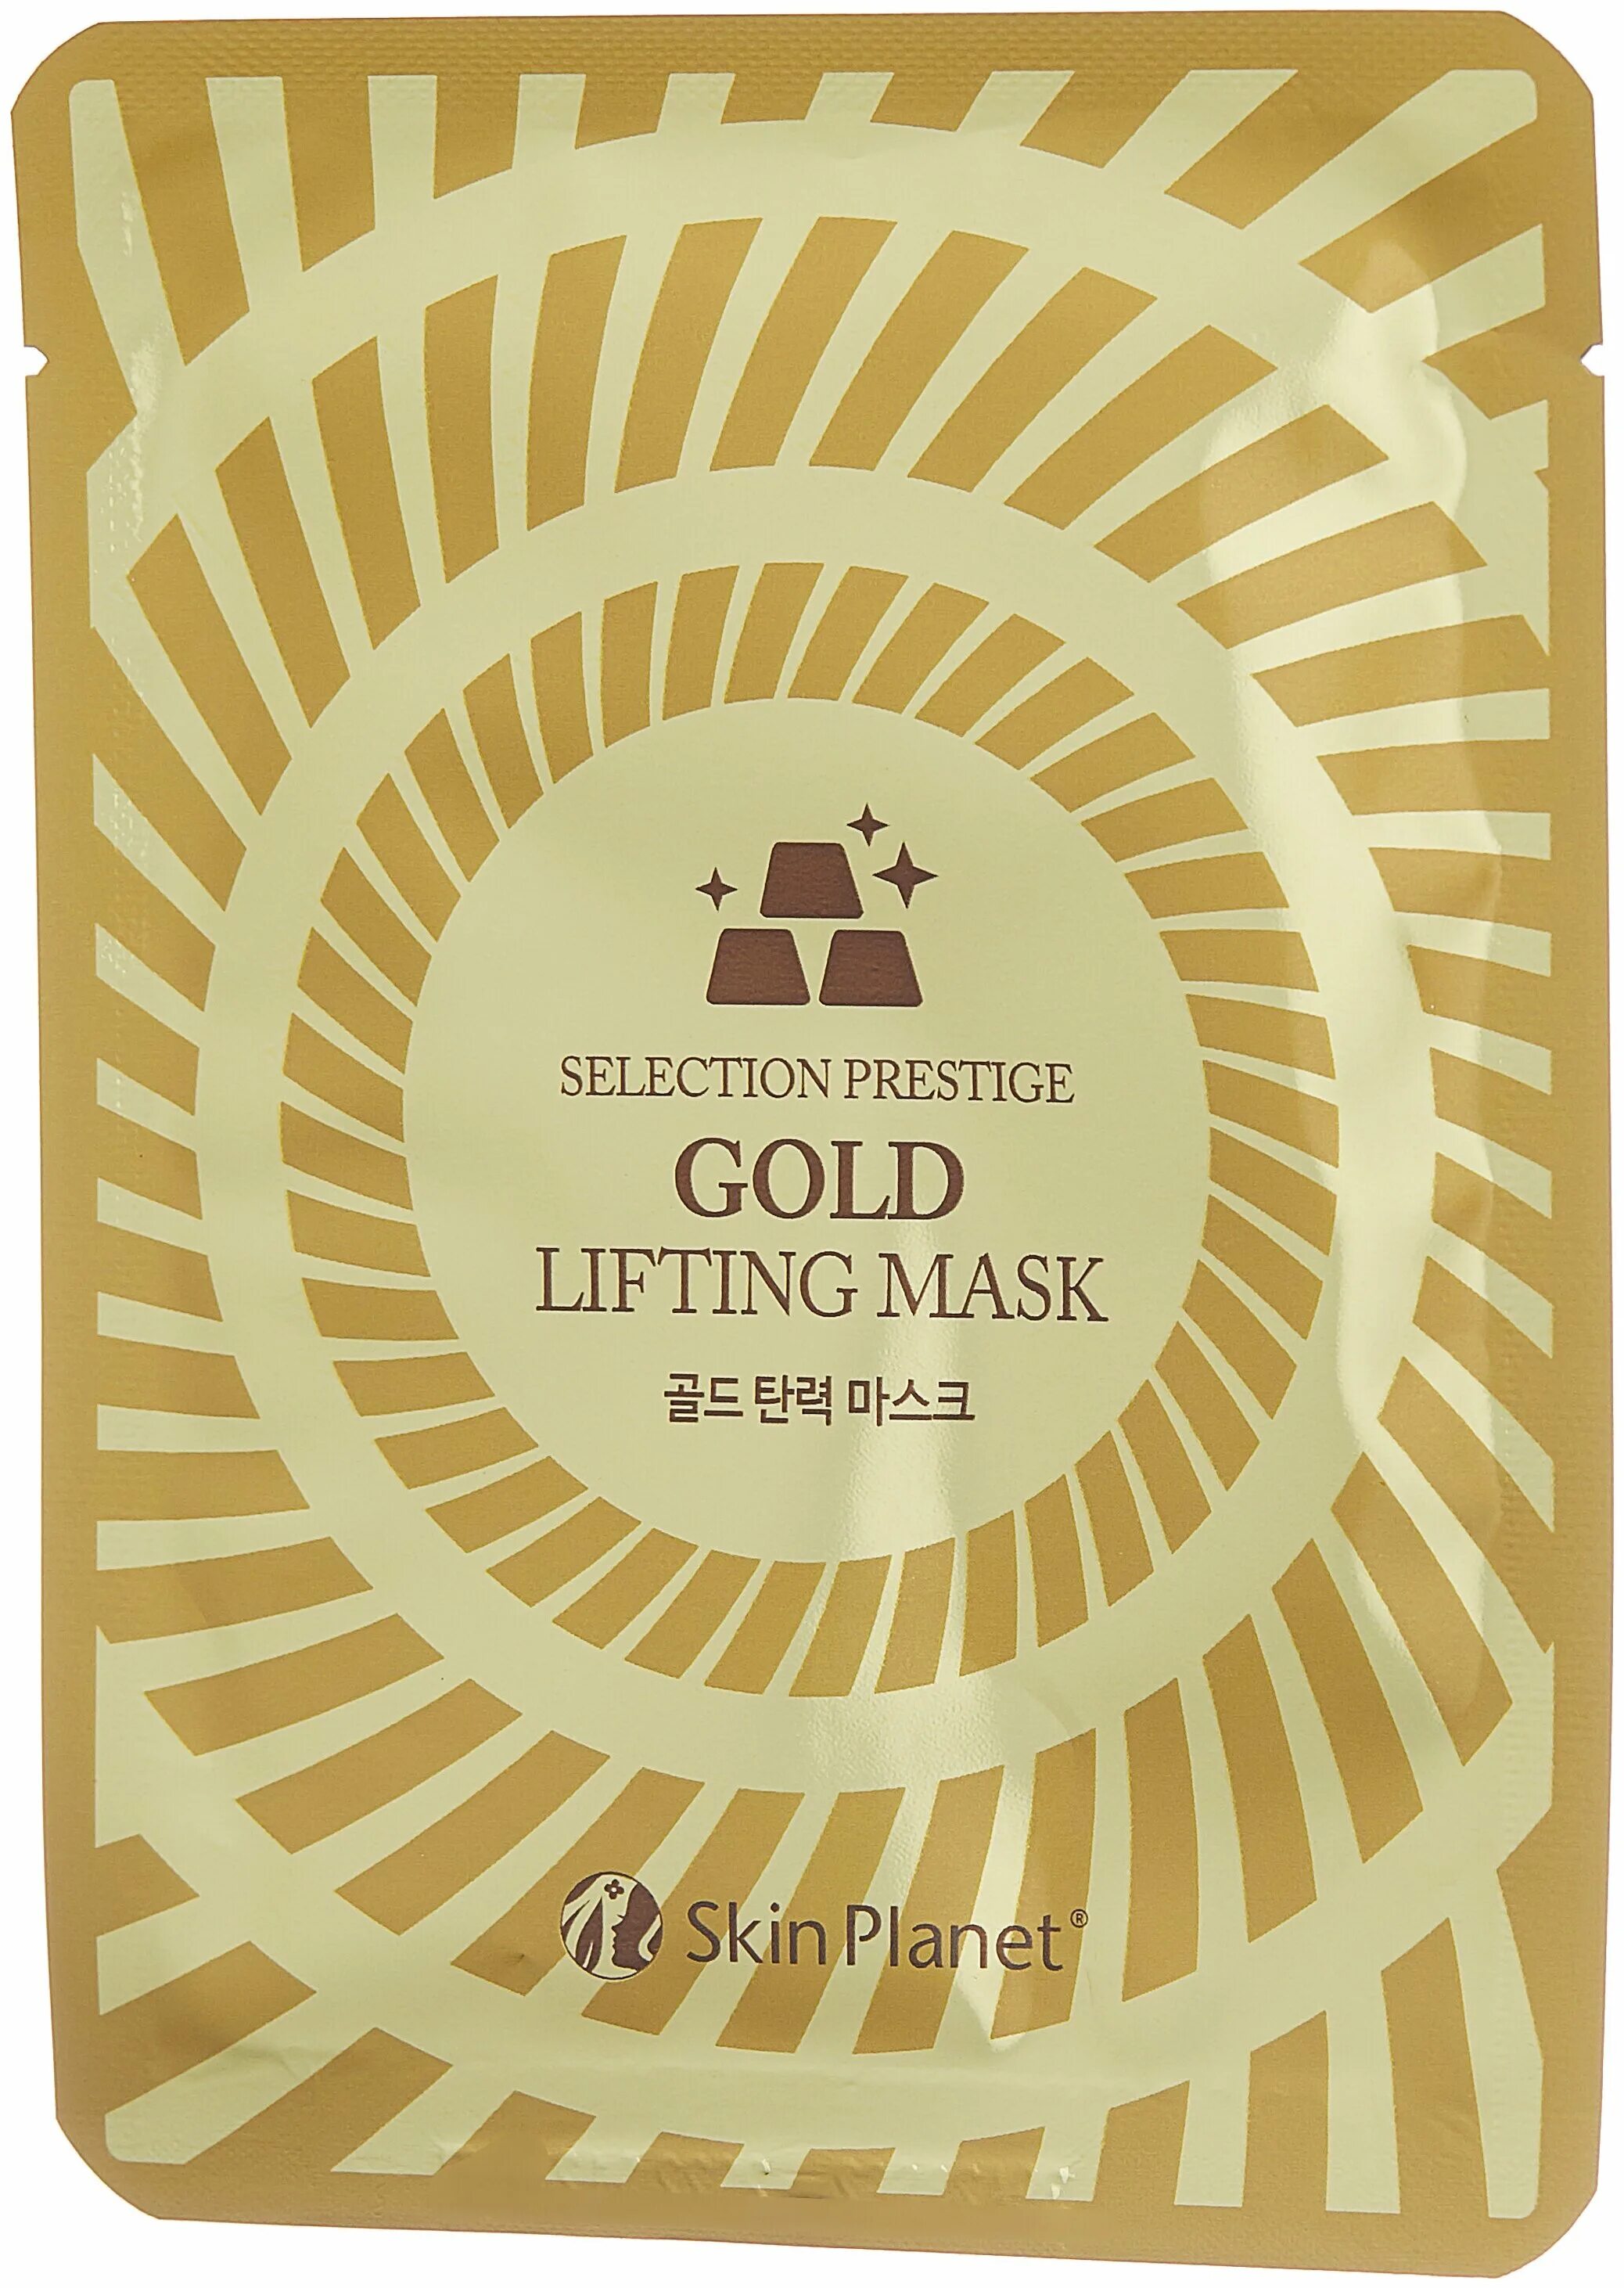 Gold lifting. Skin Planet selection тканевая маска. Skin Planet маска для лица 25г. Skin Planet selection Prestige маска ткан. MJ Care Skin Planet Gold Lifting Mask.